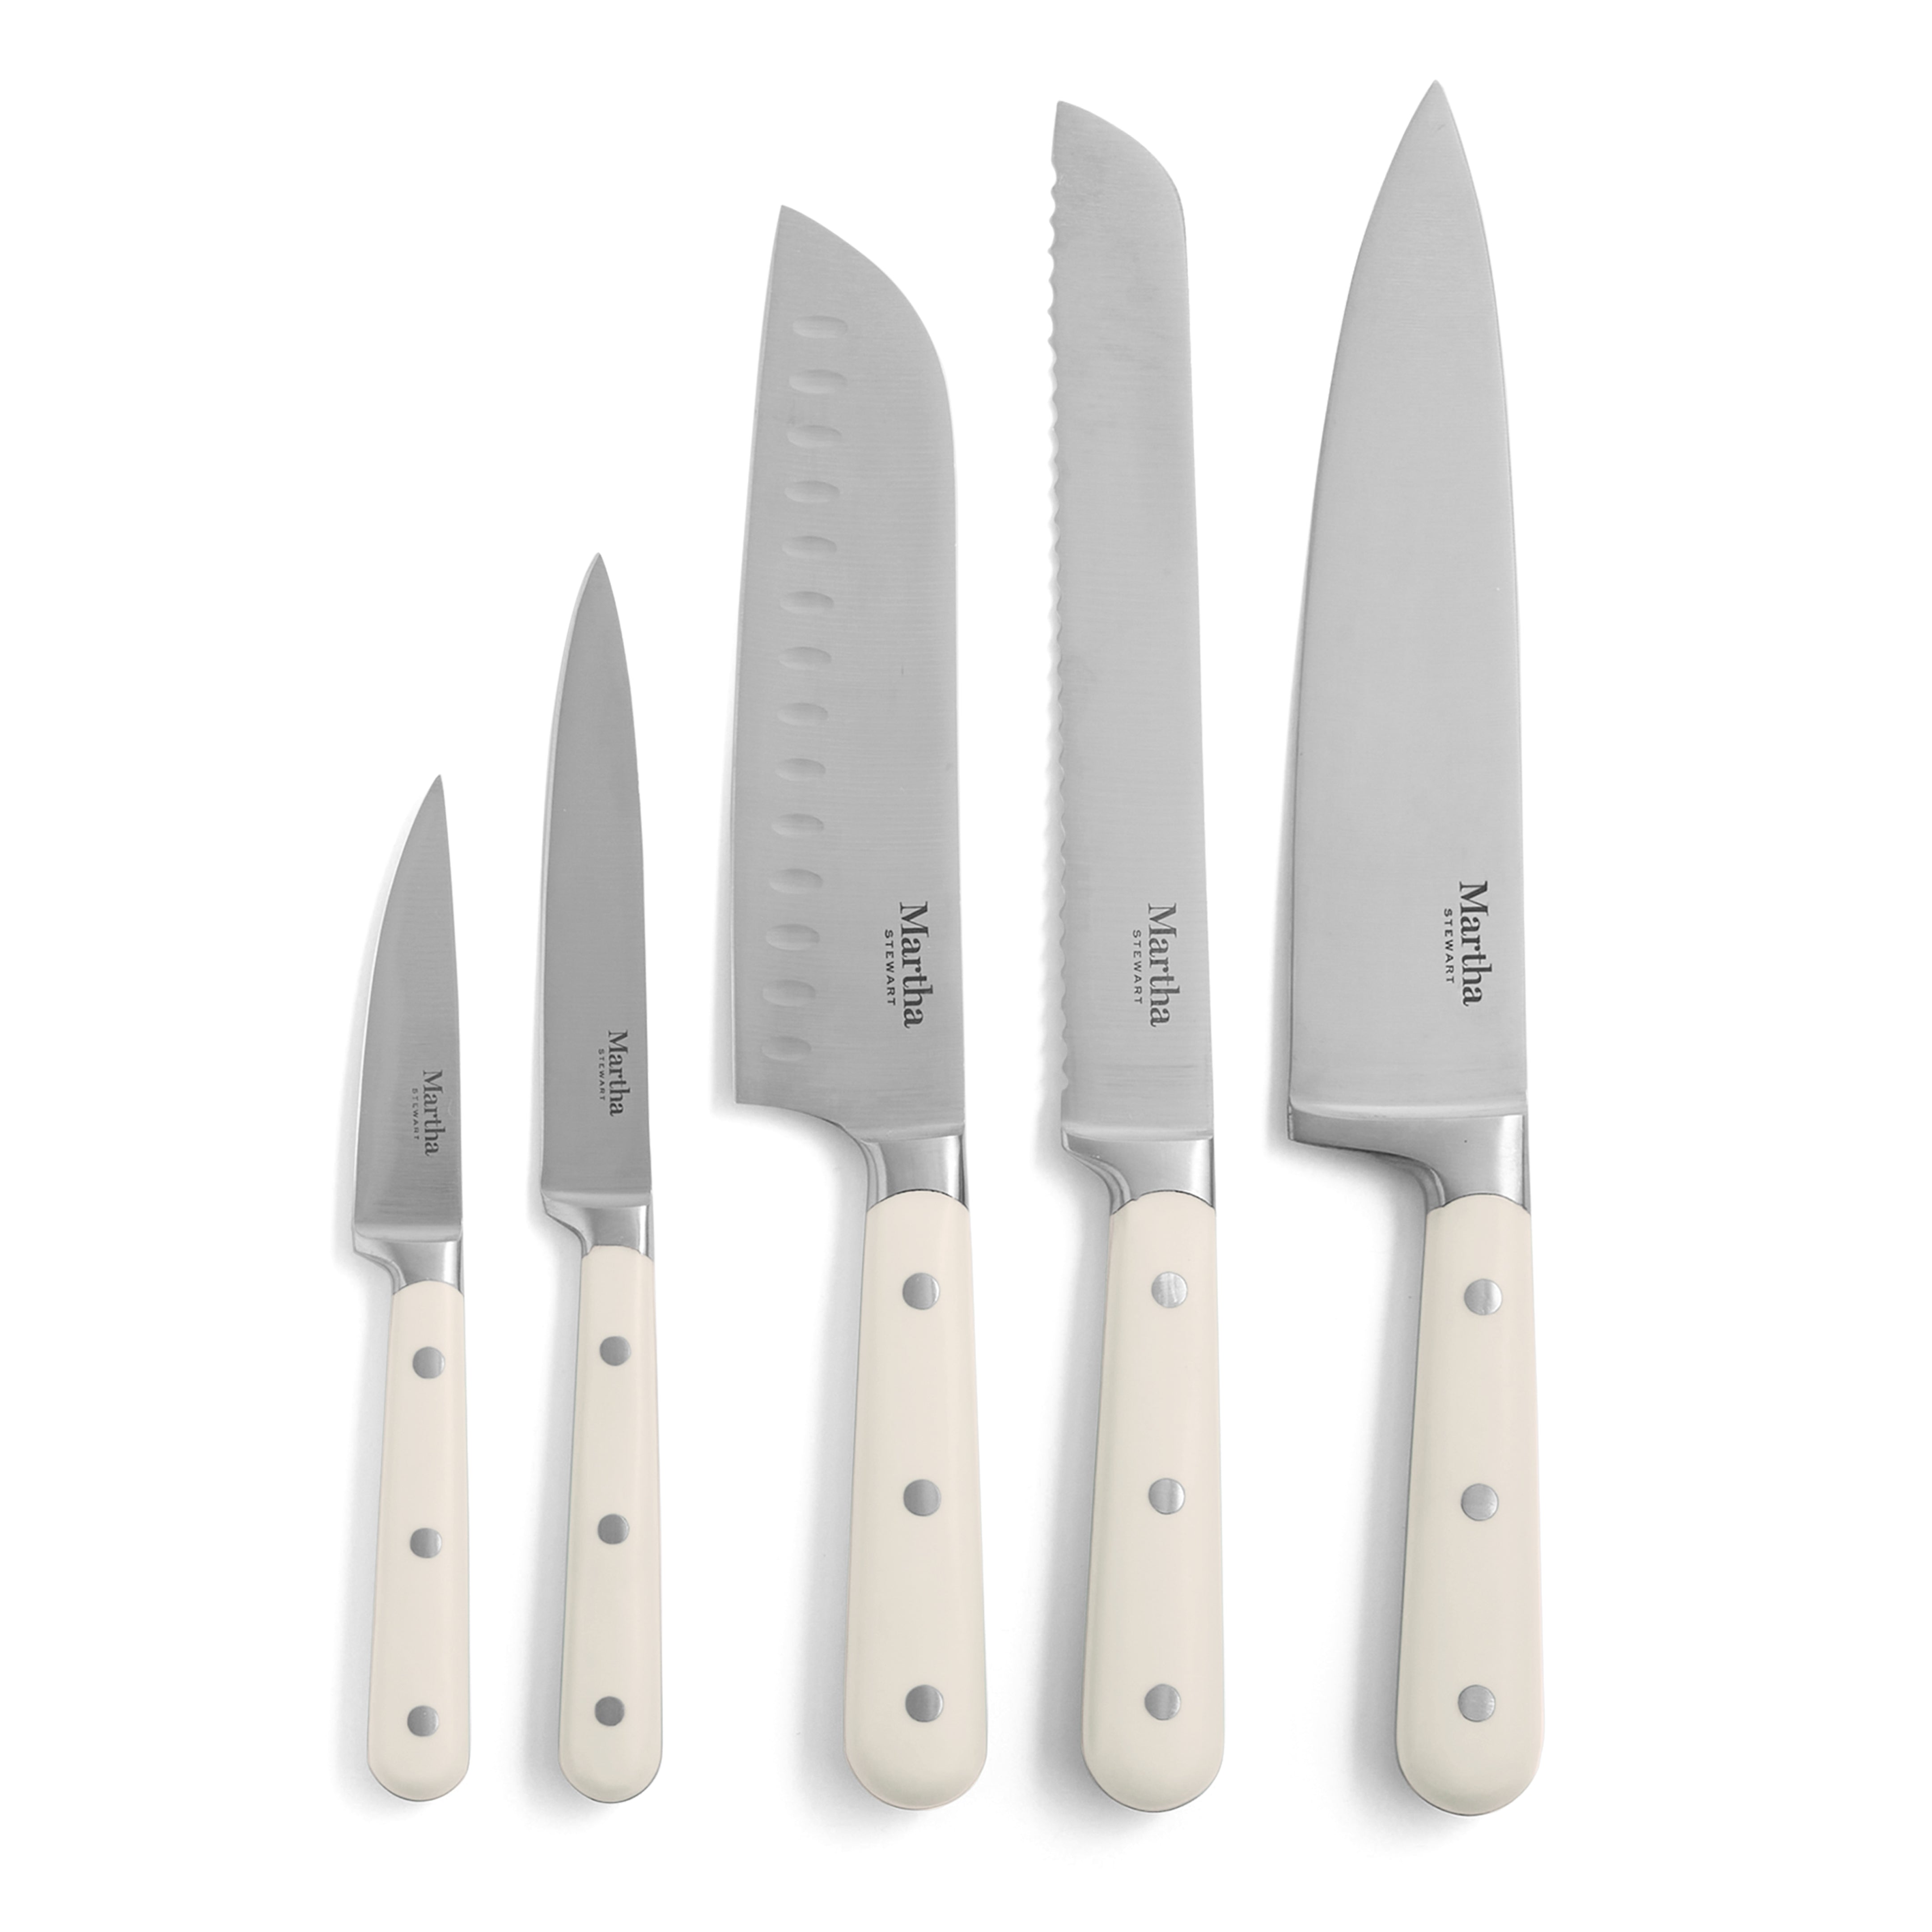 Martha Stewart Everyday 14 Piece Stainless Steel Cutlery Knife Set in Black